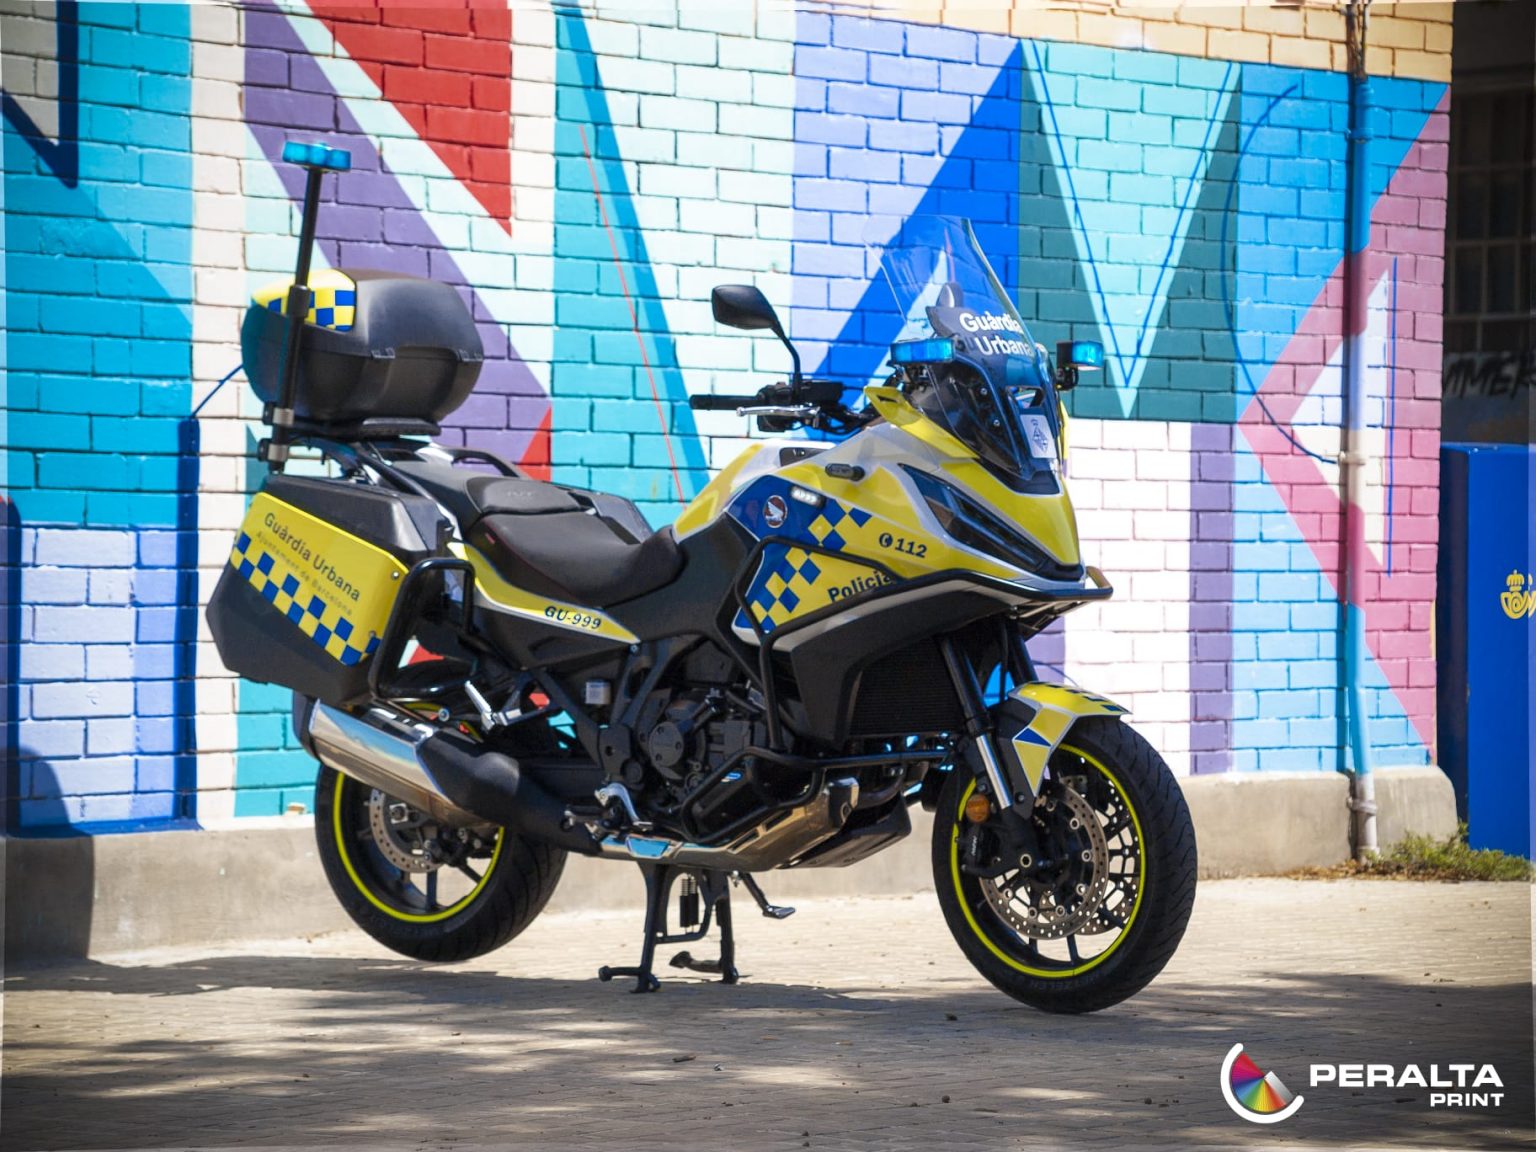 PeraltaPrint rotula las nuevas motos de la Guardia Urbana de Barcelon